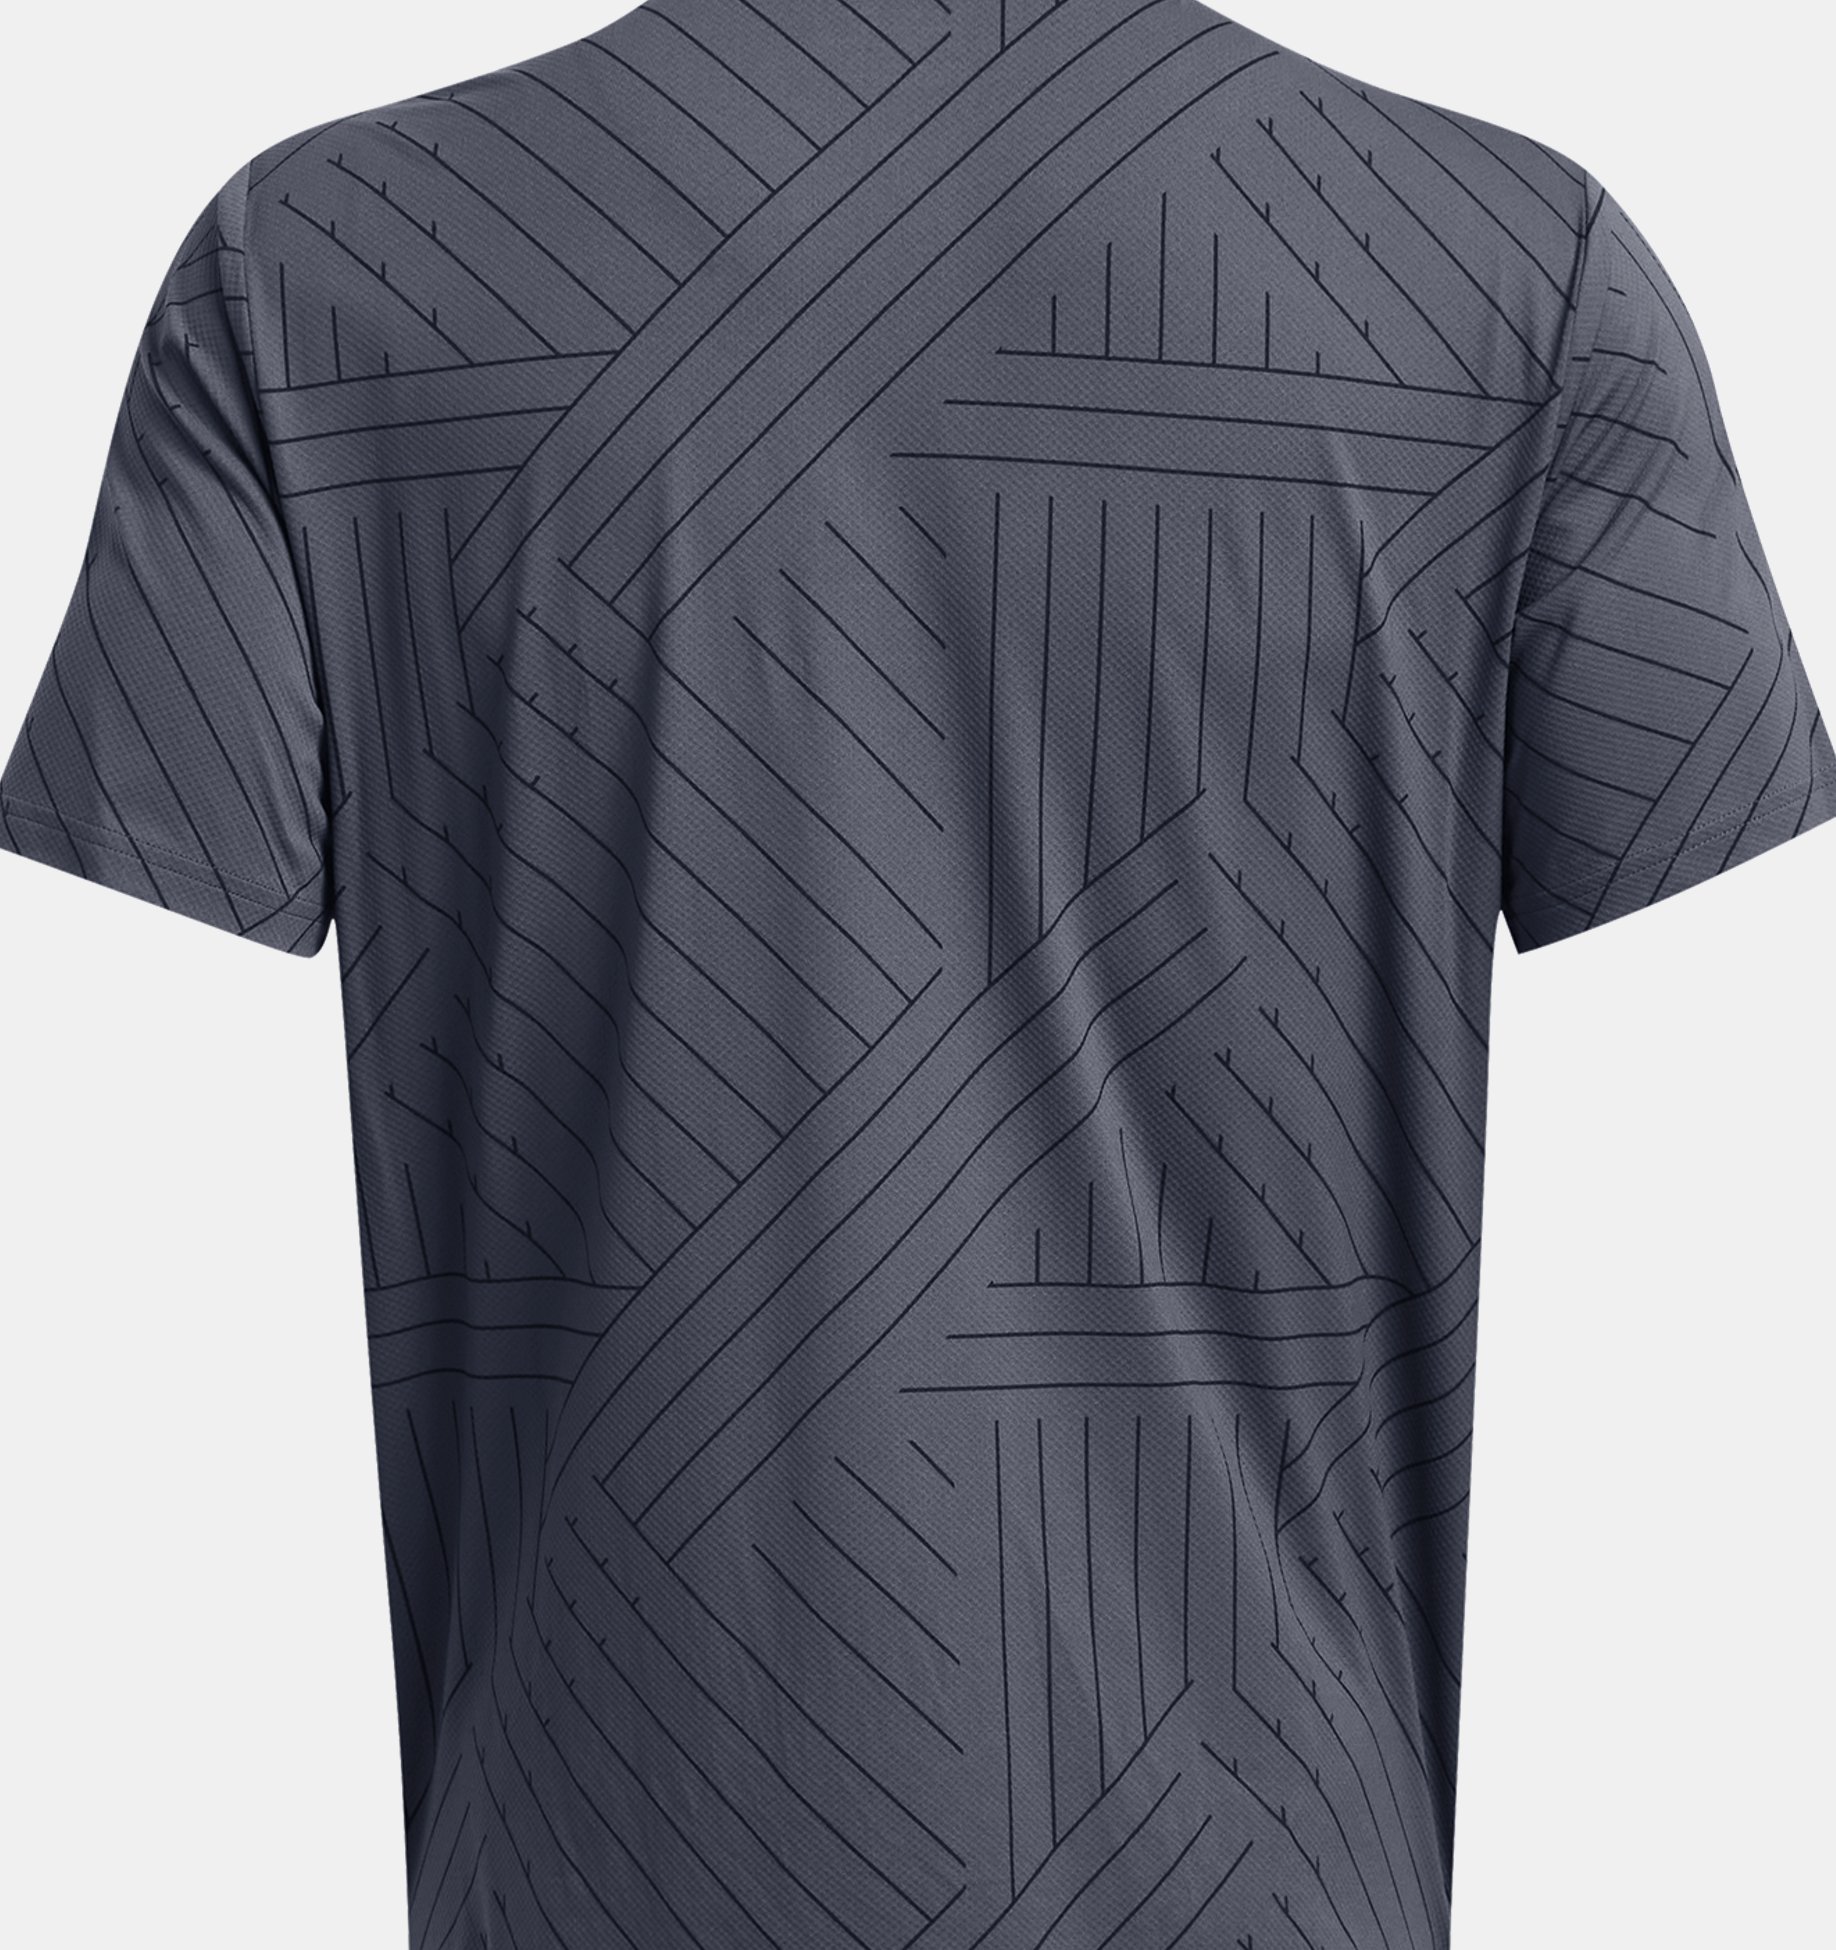  Iso-Chill Edge Polo-BLK - polo shirt for men - UNDER ARMOUR  - 72.61 € - outdoorové oblečení a vybavení shop